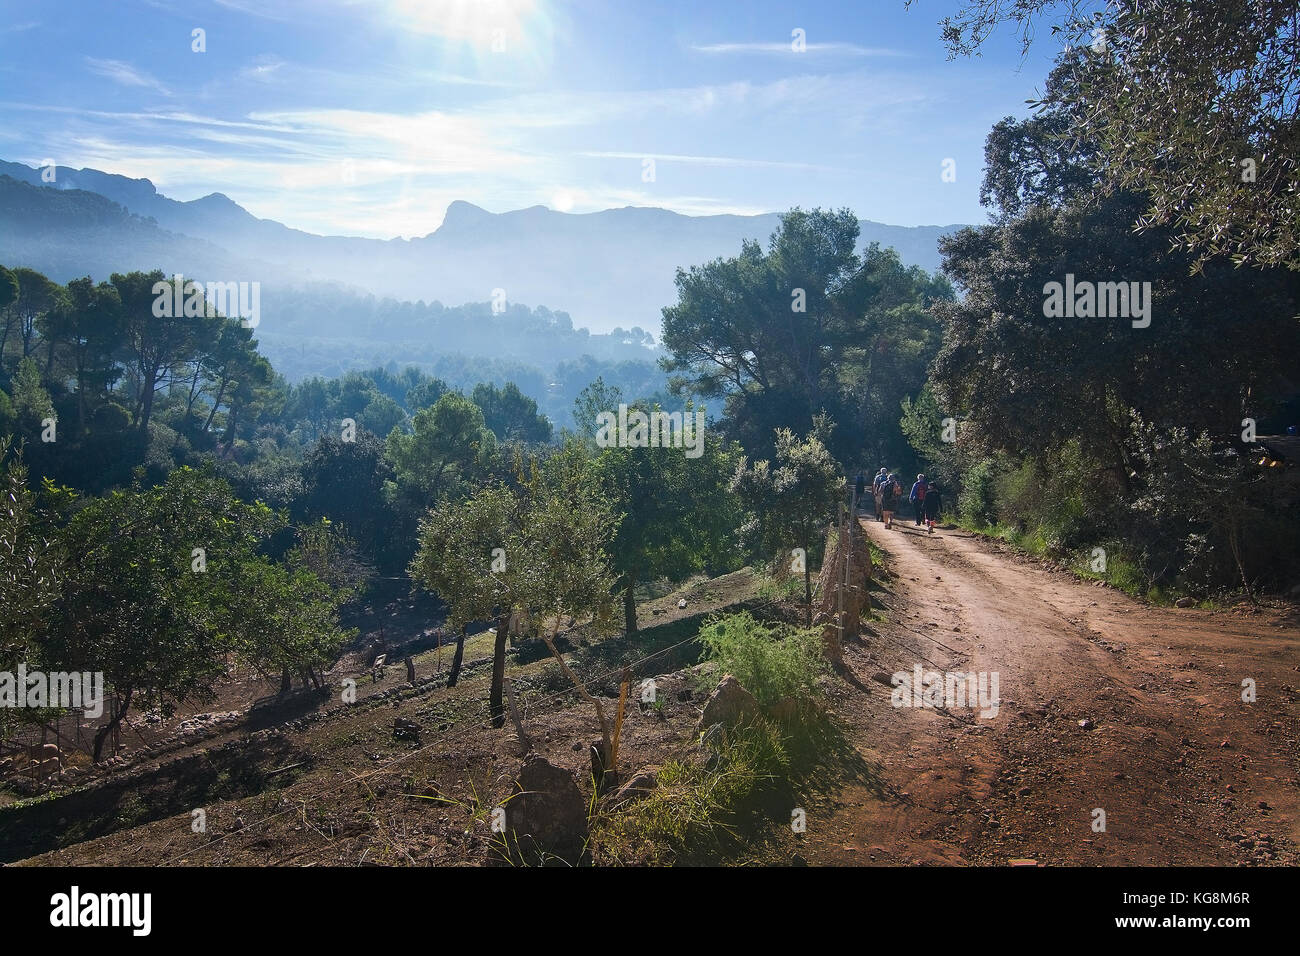 Landscape view in the Tramuntana mountains near Soller, Mallorca, Spain. Stock Photo